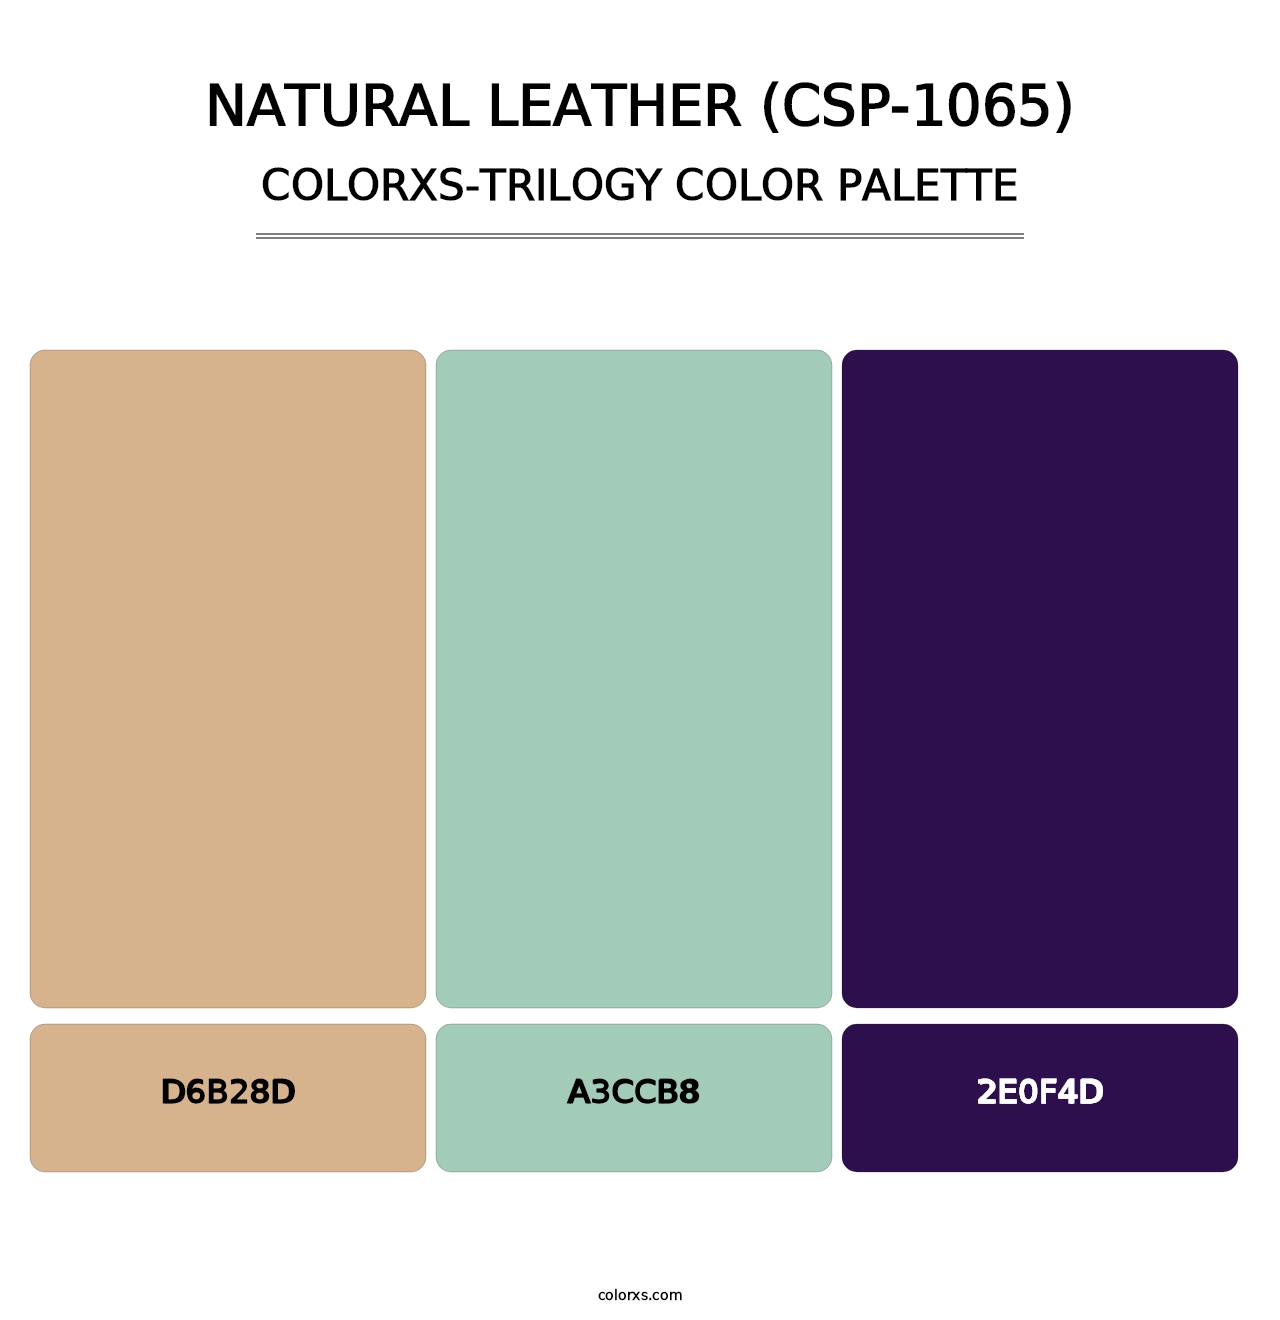 Natural Leather (CSP-1065) - Colorxs Trilogy Palette